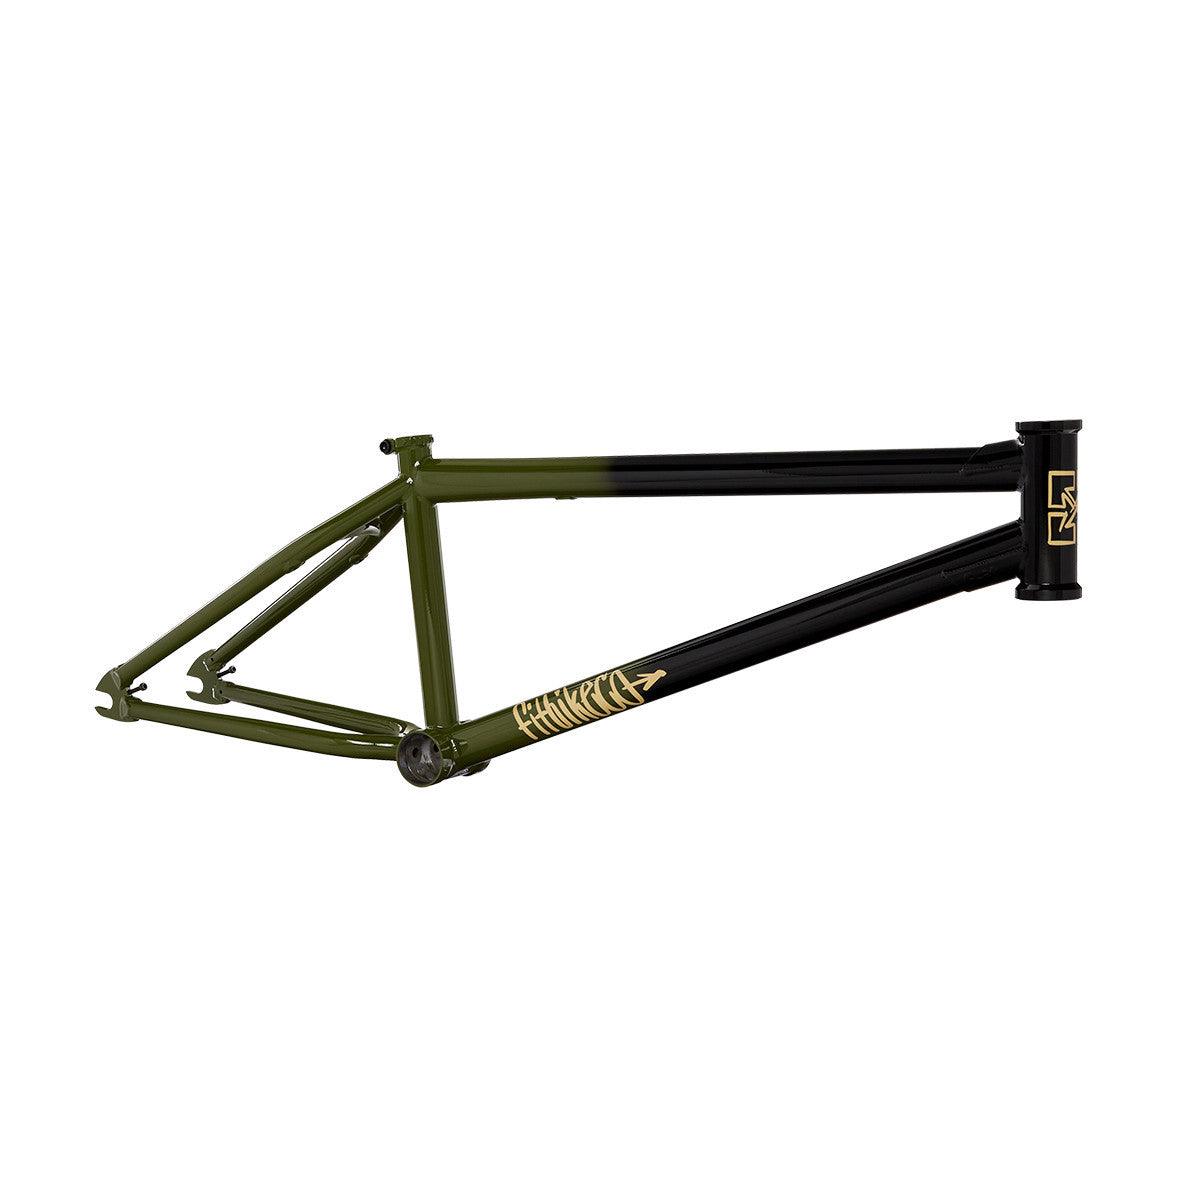 Fit Shortcut BMX Frame - Gloss Black/Army Green Fade - 21" - Alaska Bicycle Center